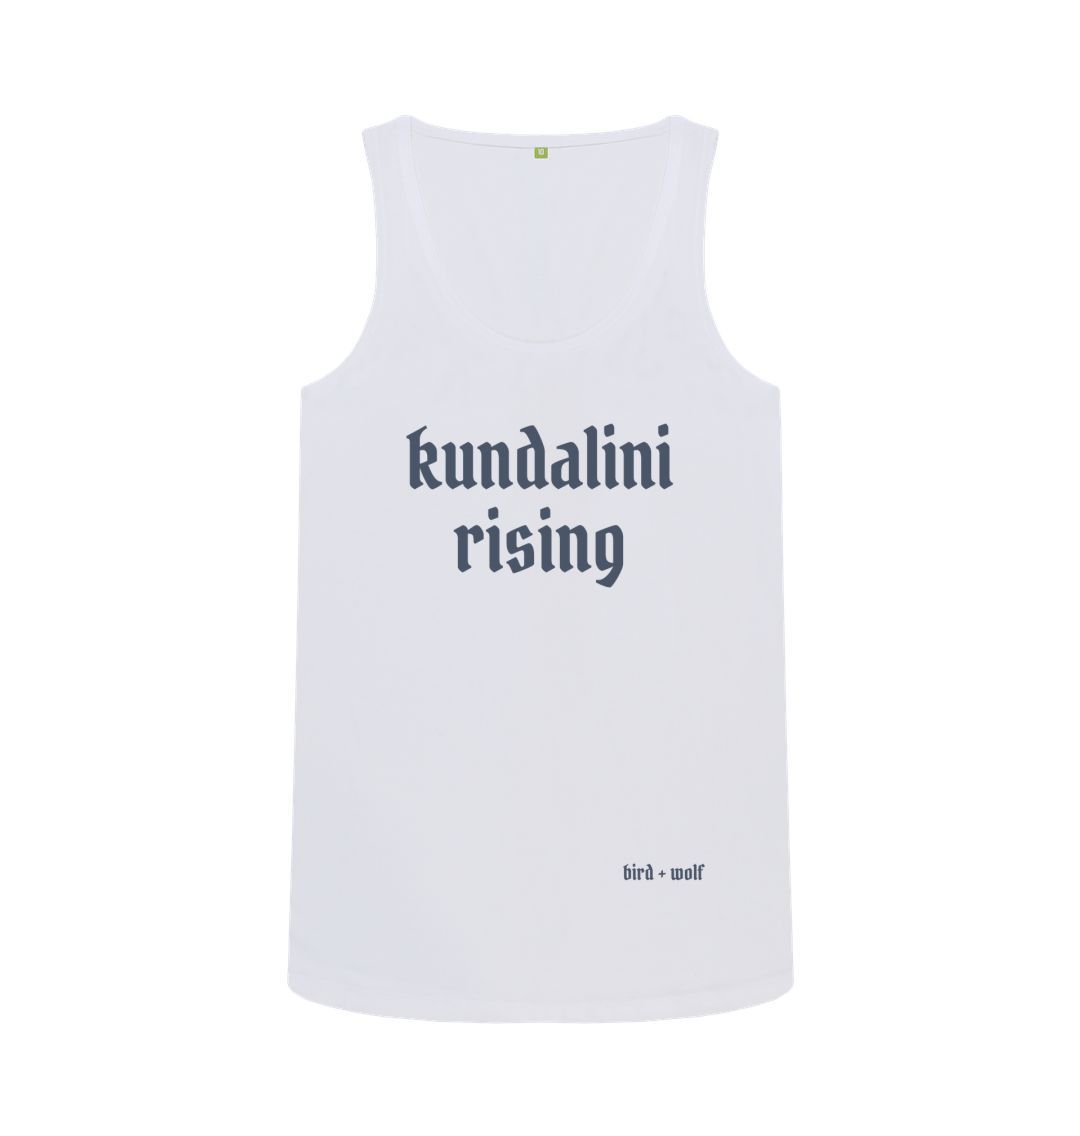 White Kundalini Rising Vest Top